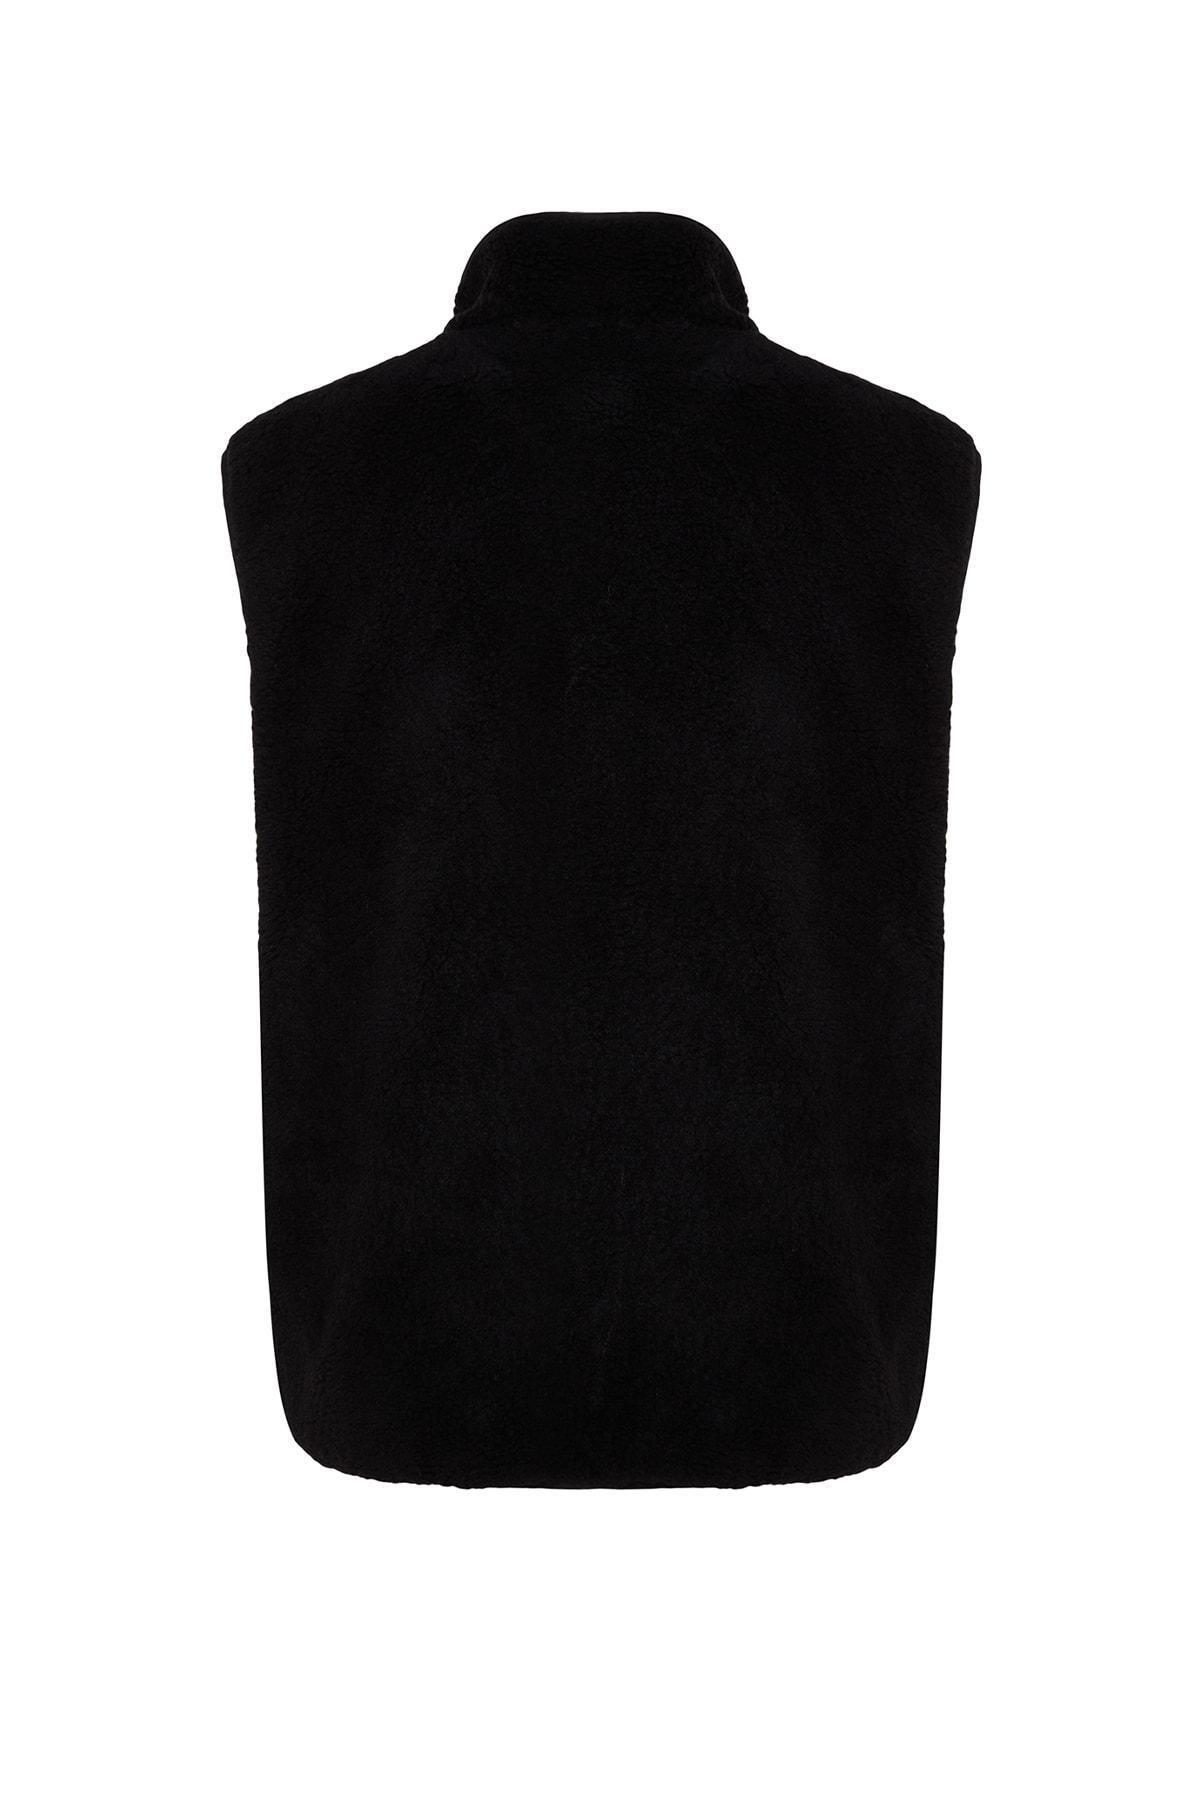 Trendyol - Black Colour Block Vest